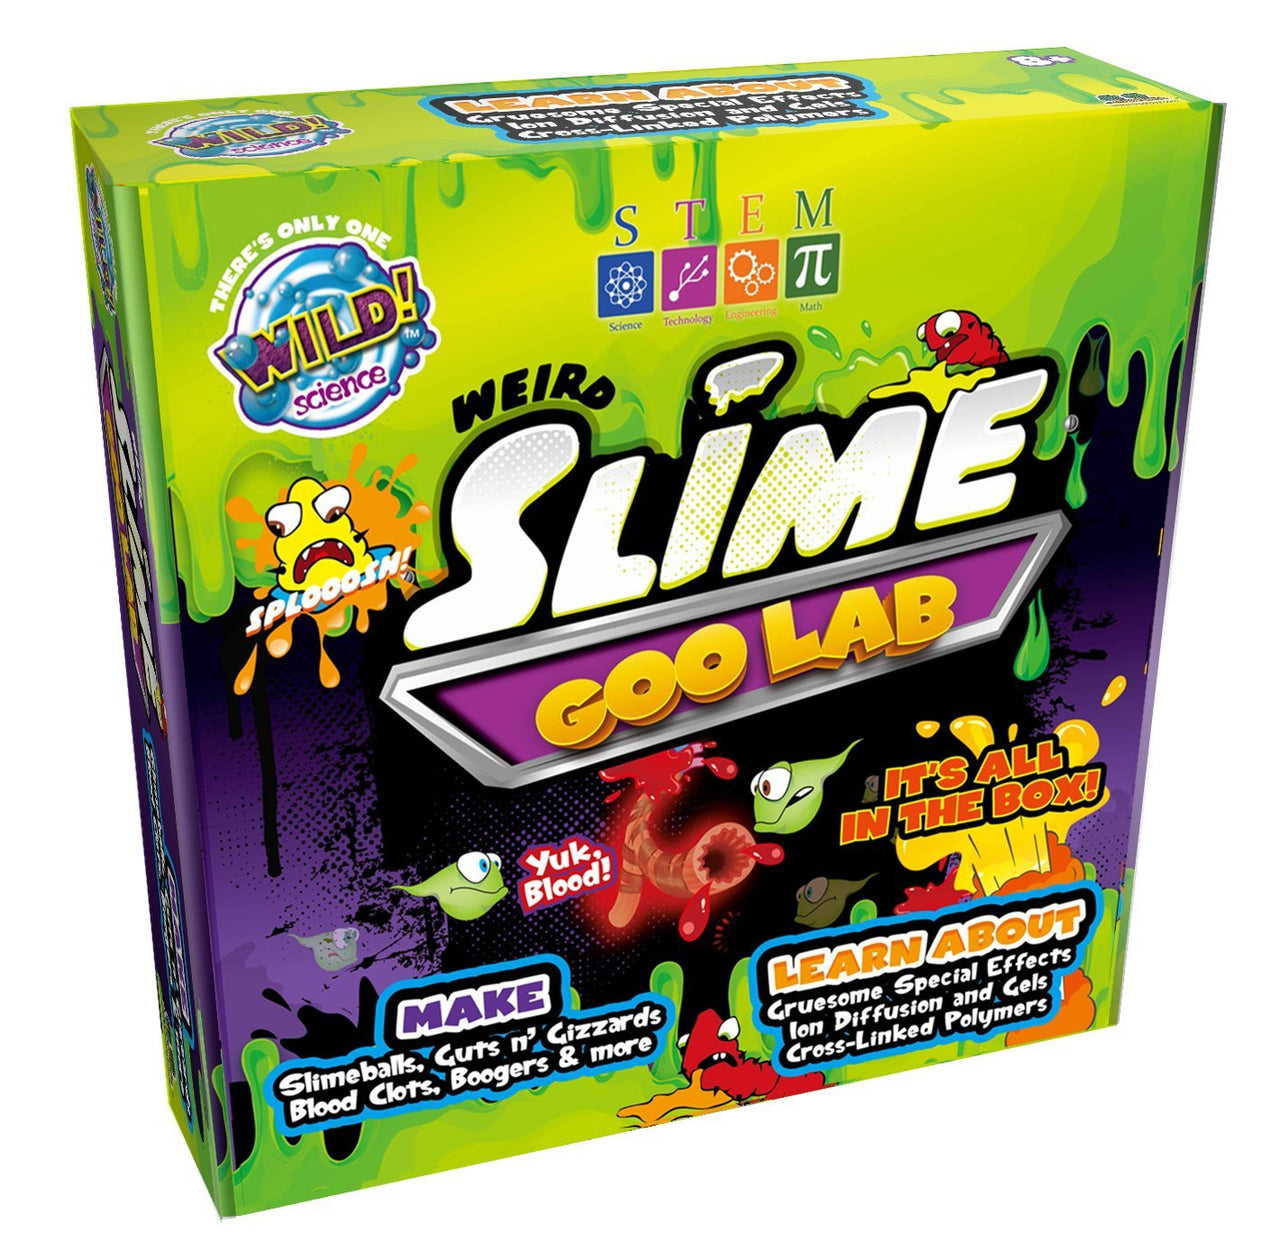 Wild! Science Weird Slime Goo Lab